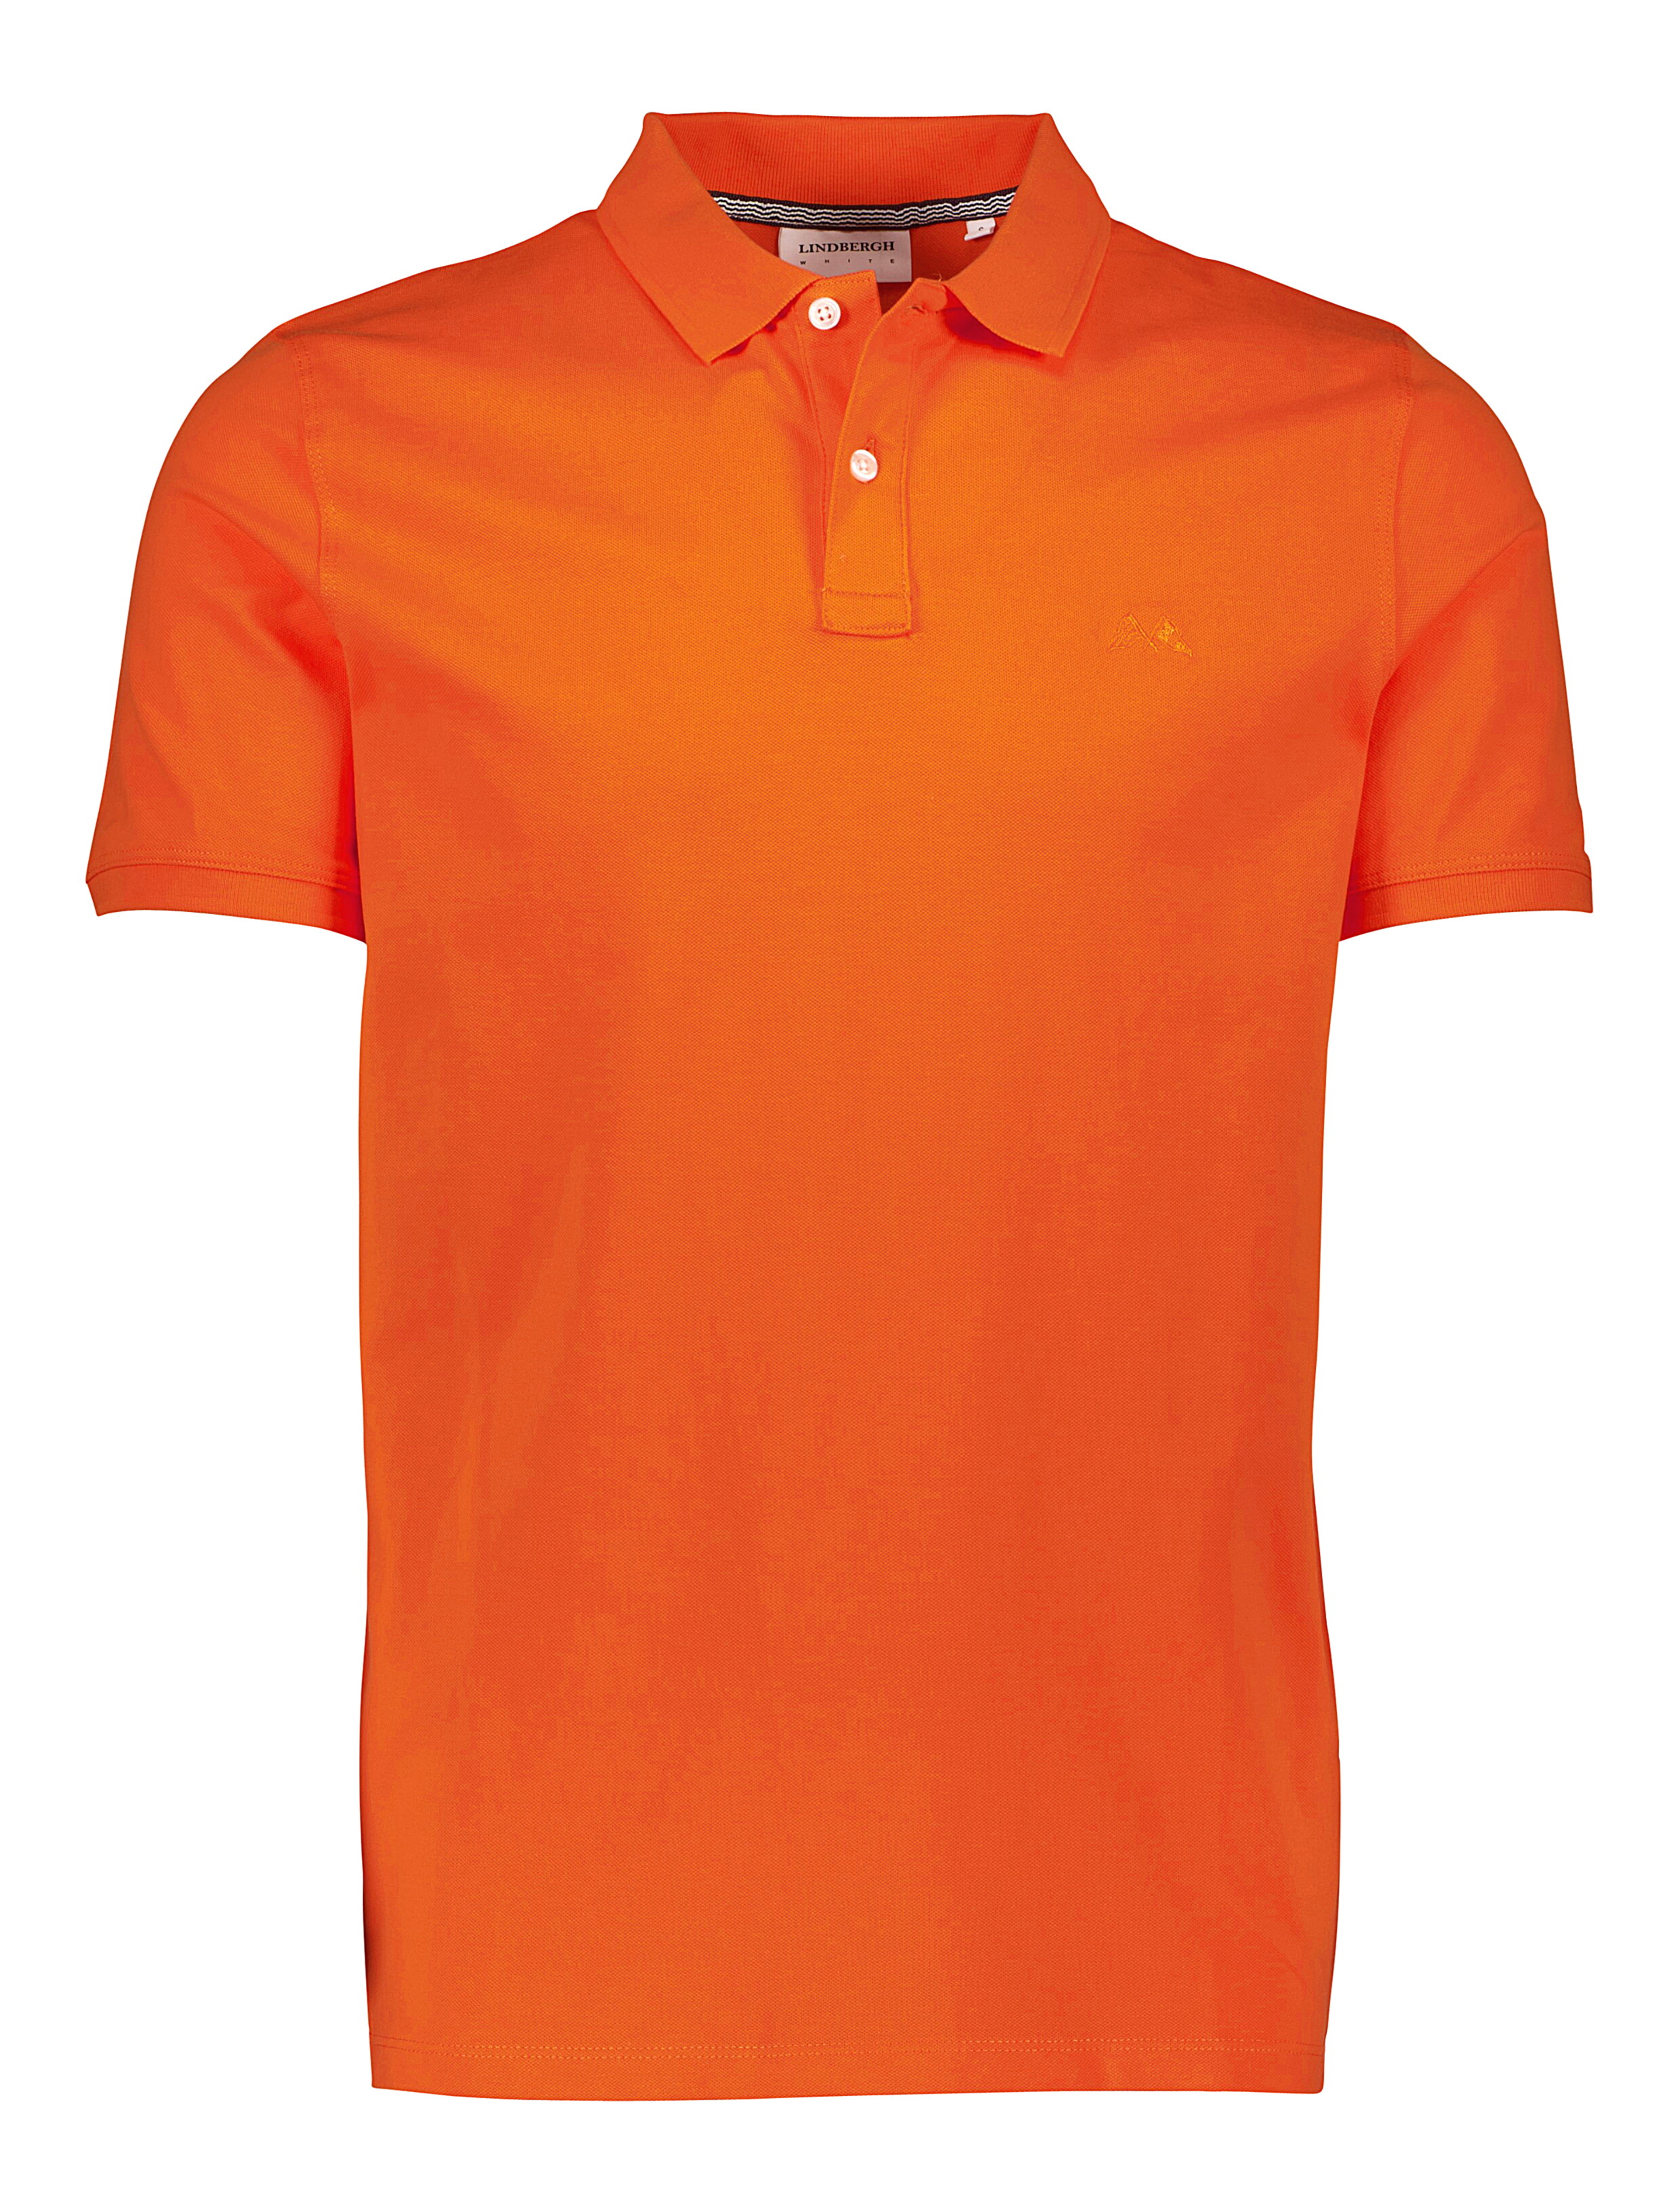 Lindbergh Polo shirt orange / orange